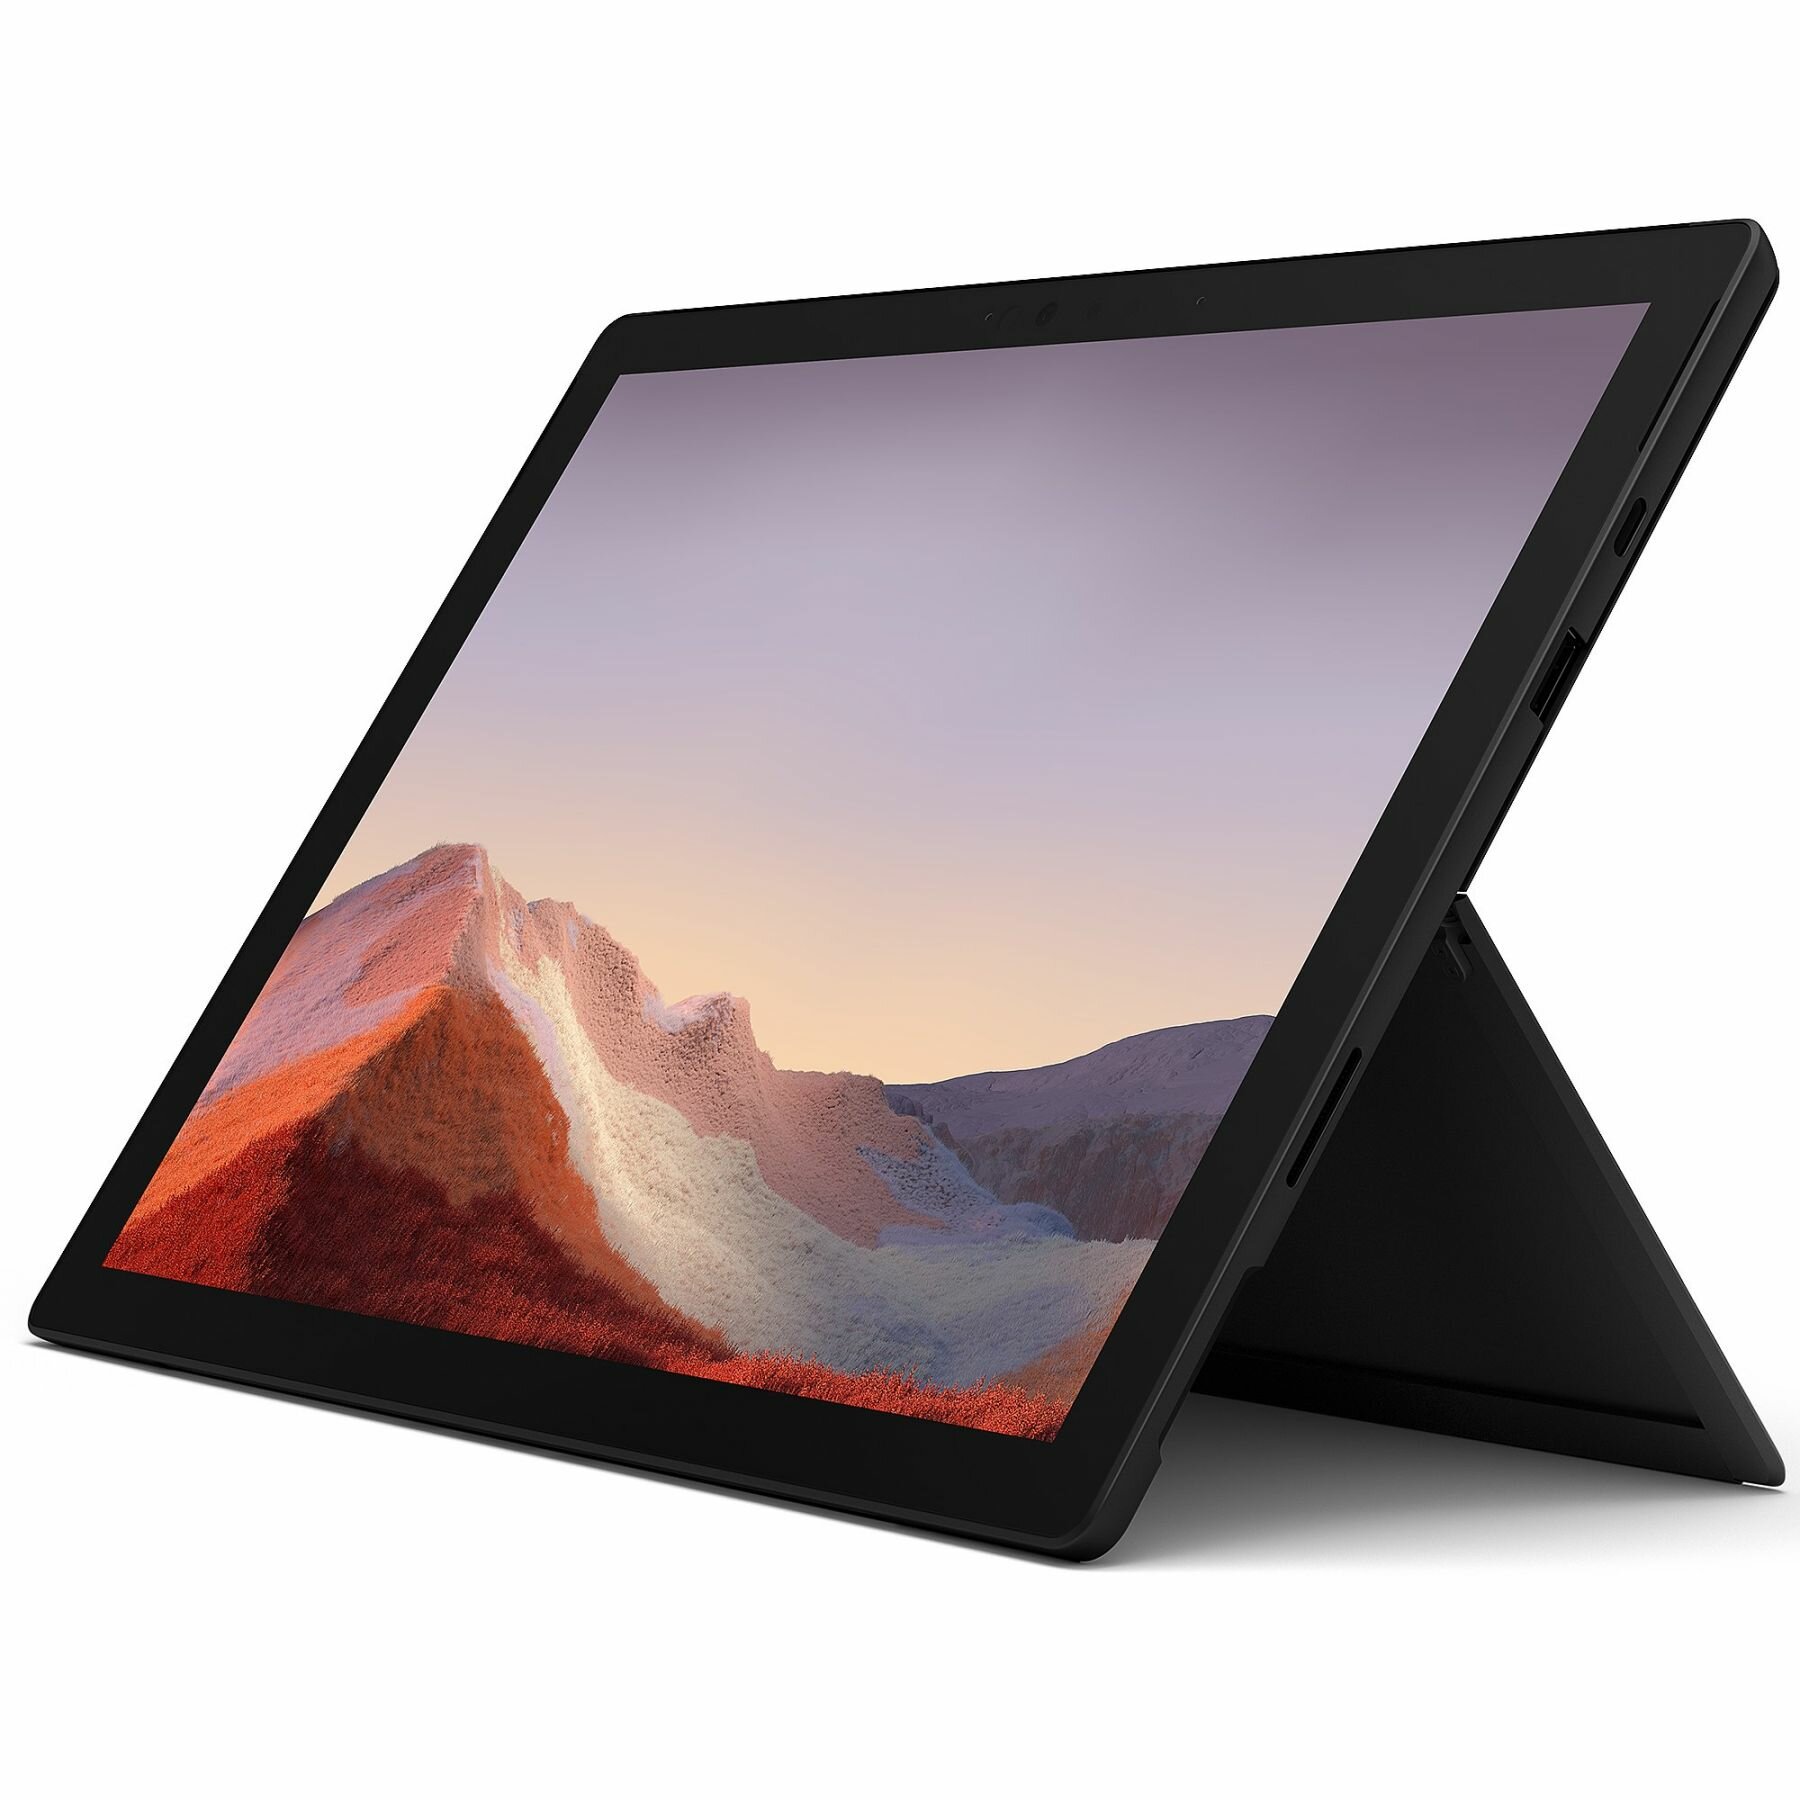 Планшет Microsoft Surface Pro 7 i5 8Gb 256Gb (Black) Business Version (Windows 10 Pro) уценка - едва заметный скол